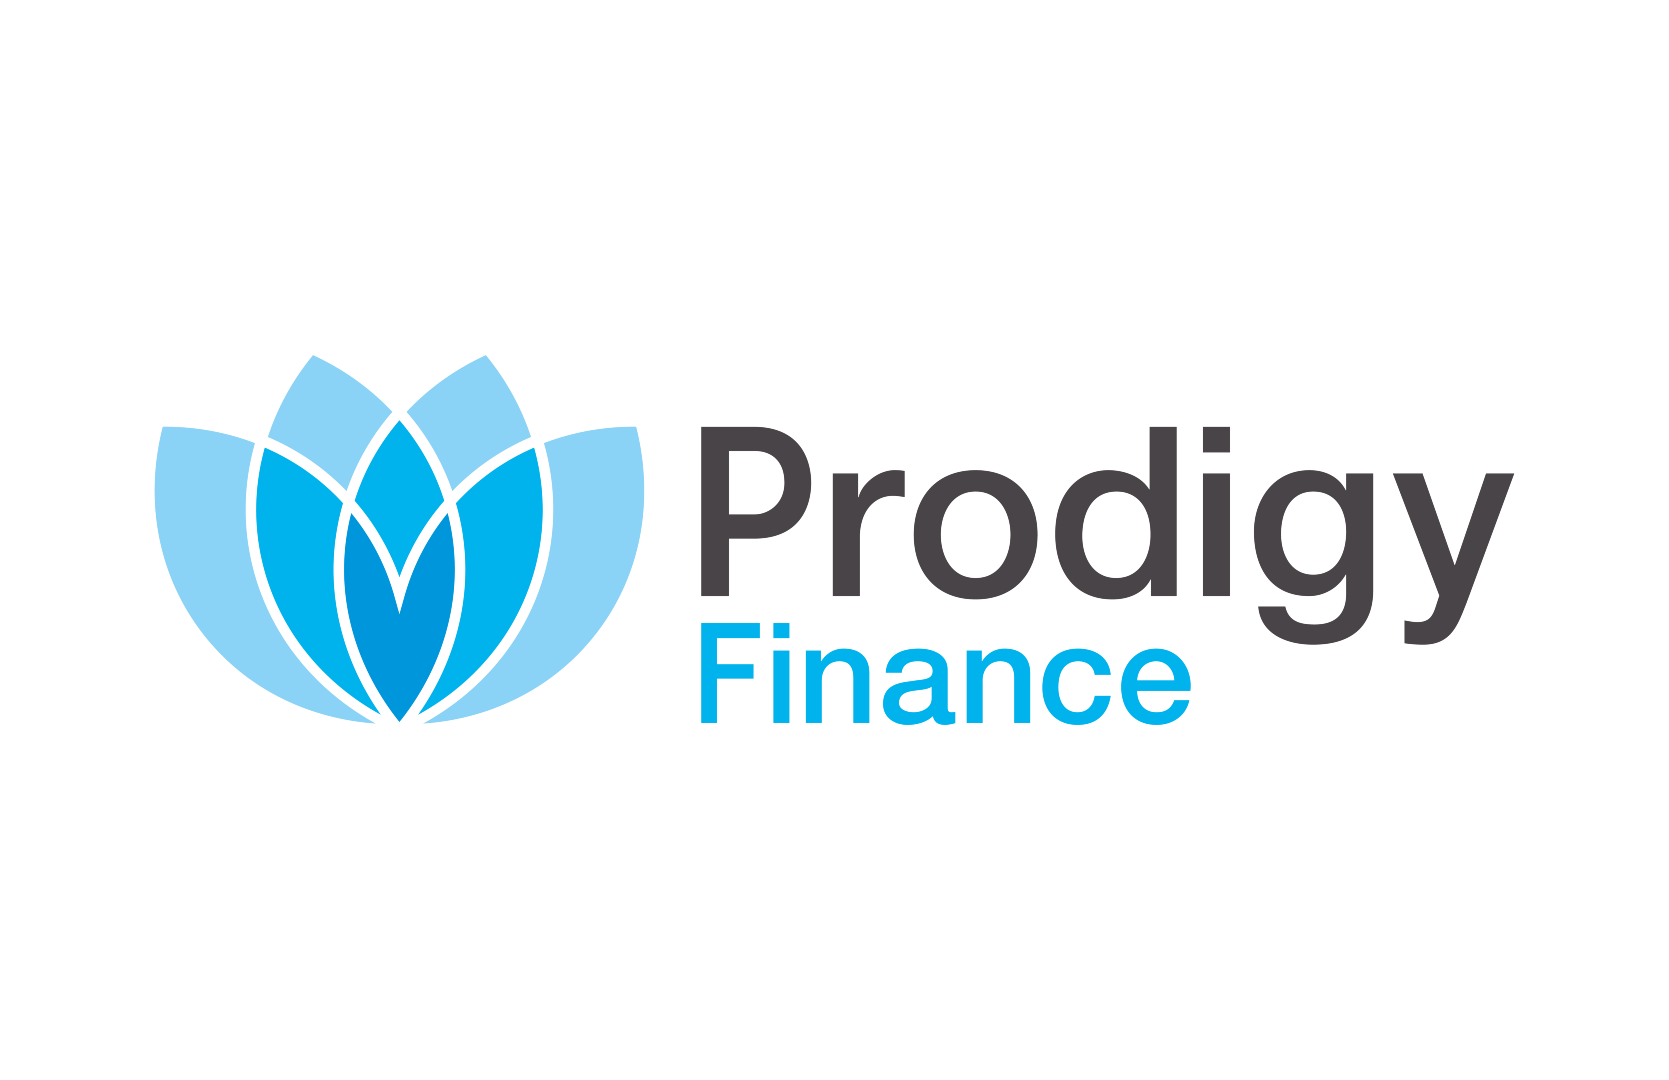 prodigy finance - logo